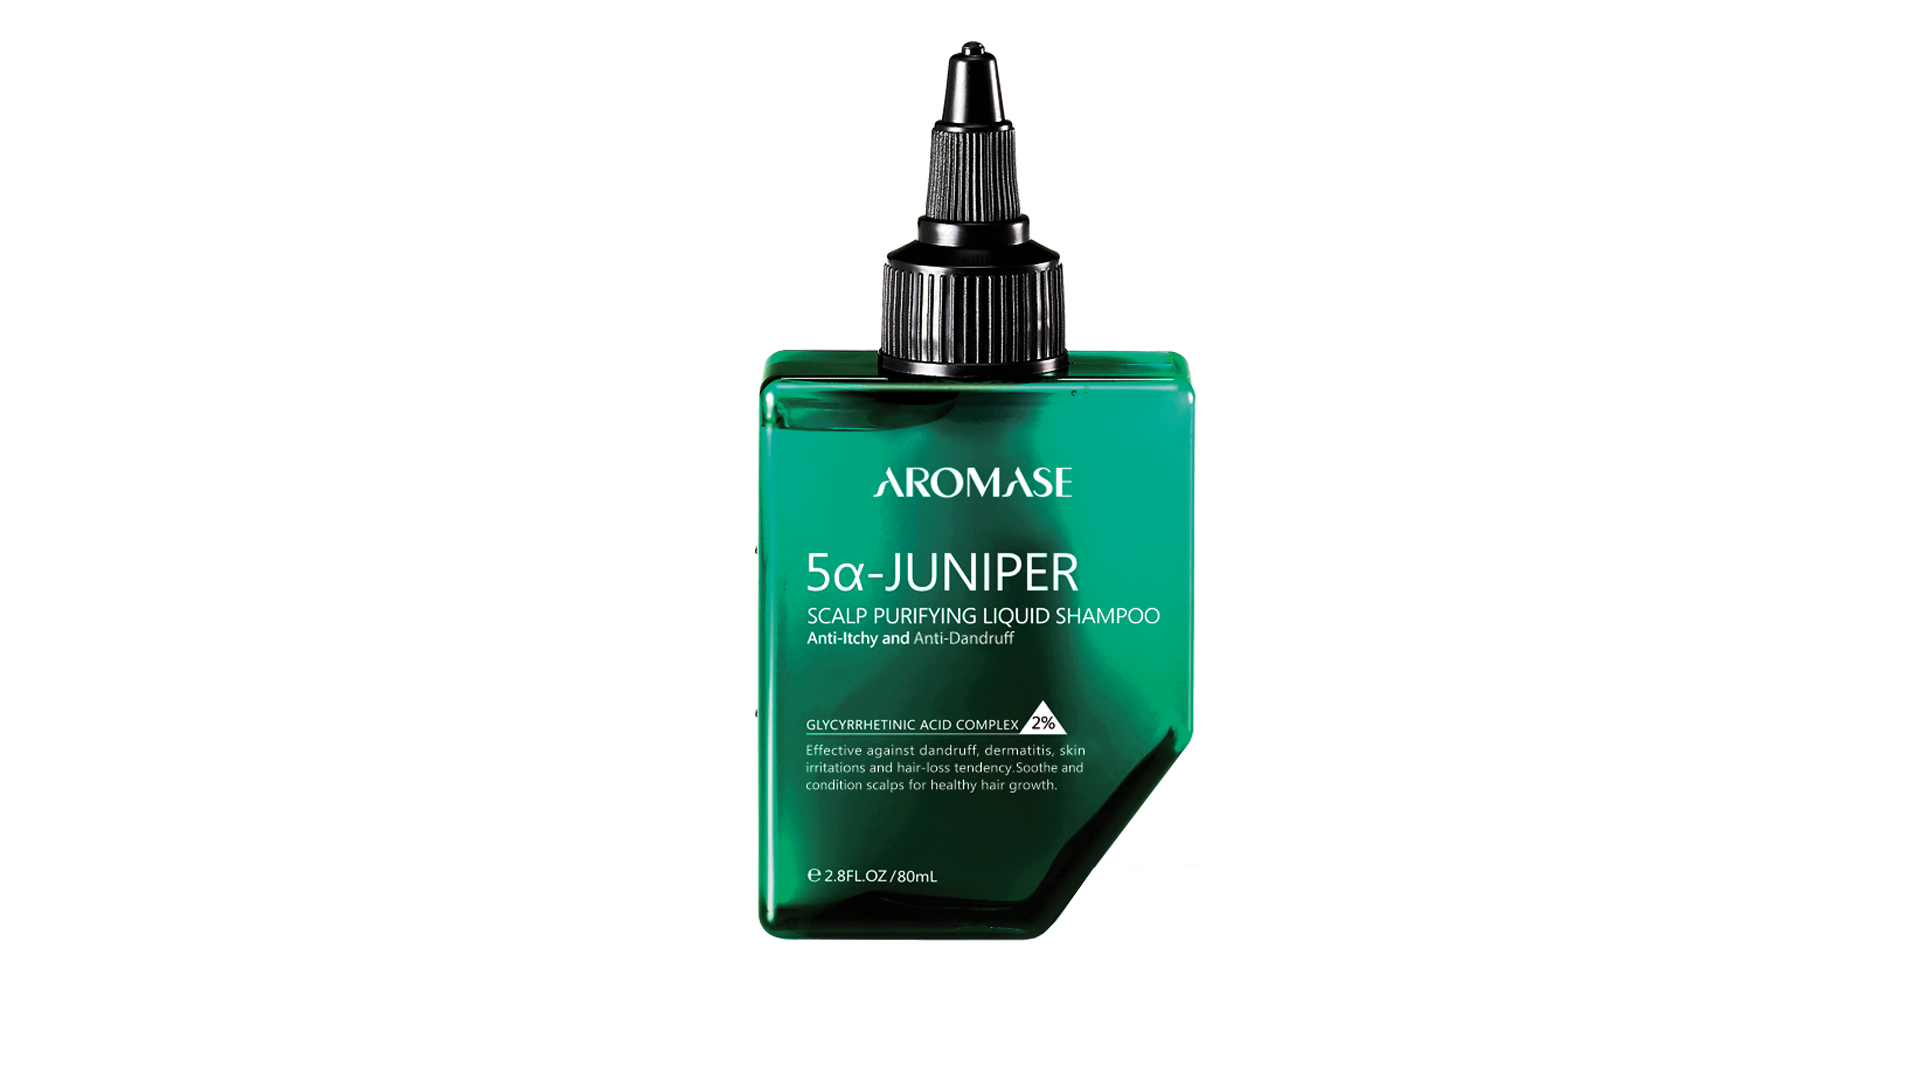 Aromase 5α JUNIPER Scalp Purifying Liquid Shampoo 80 ml